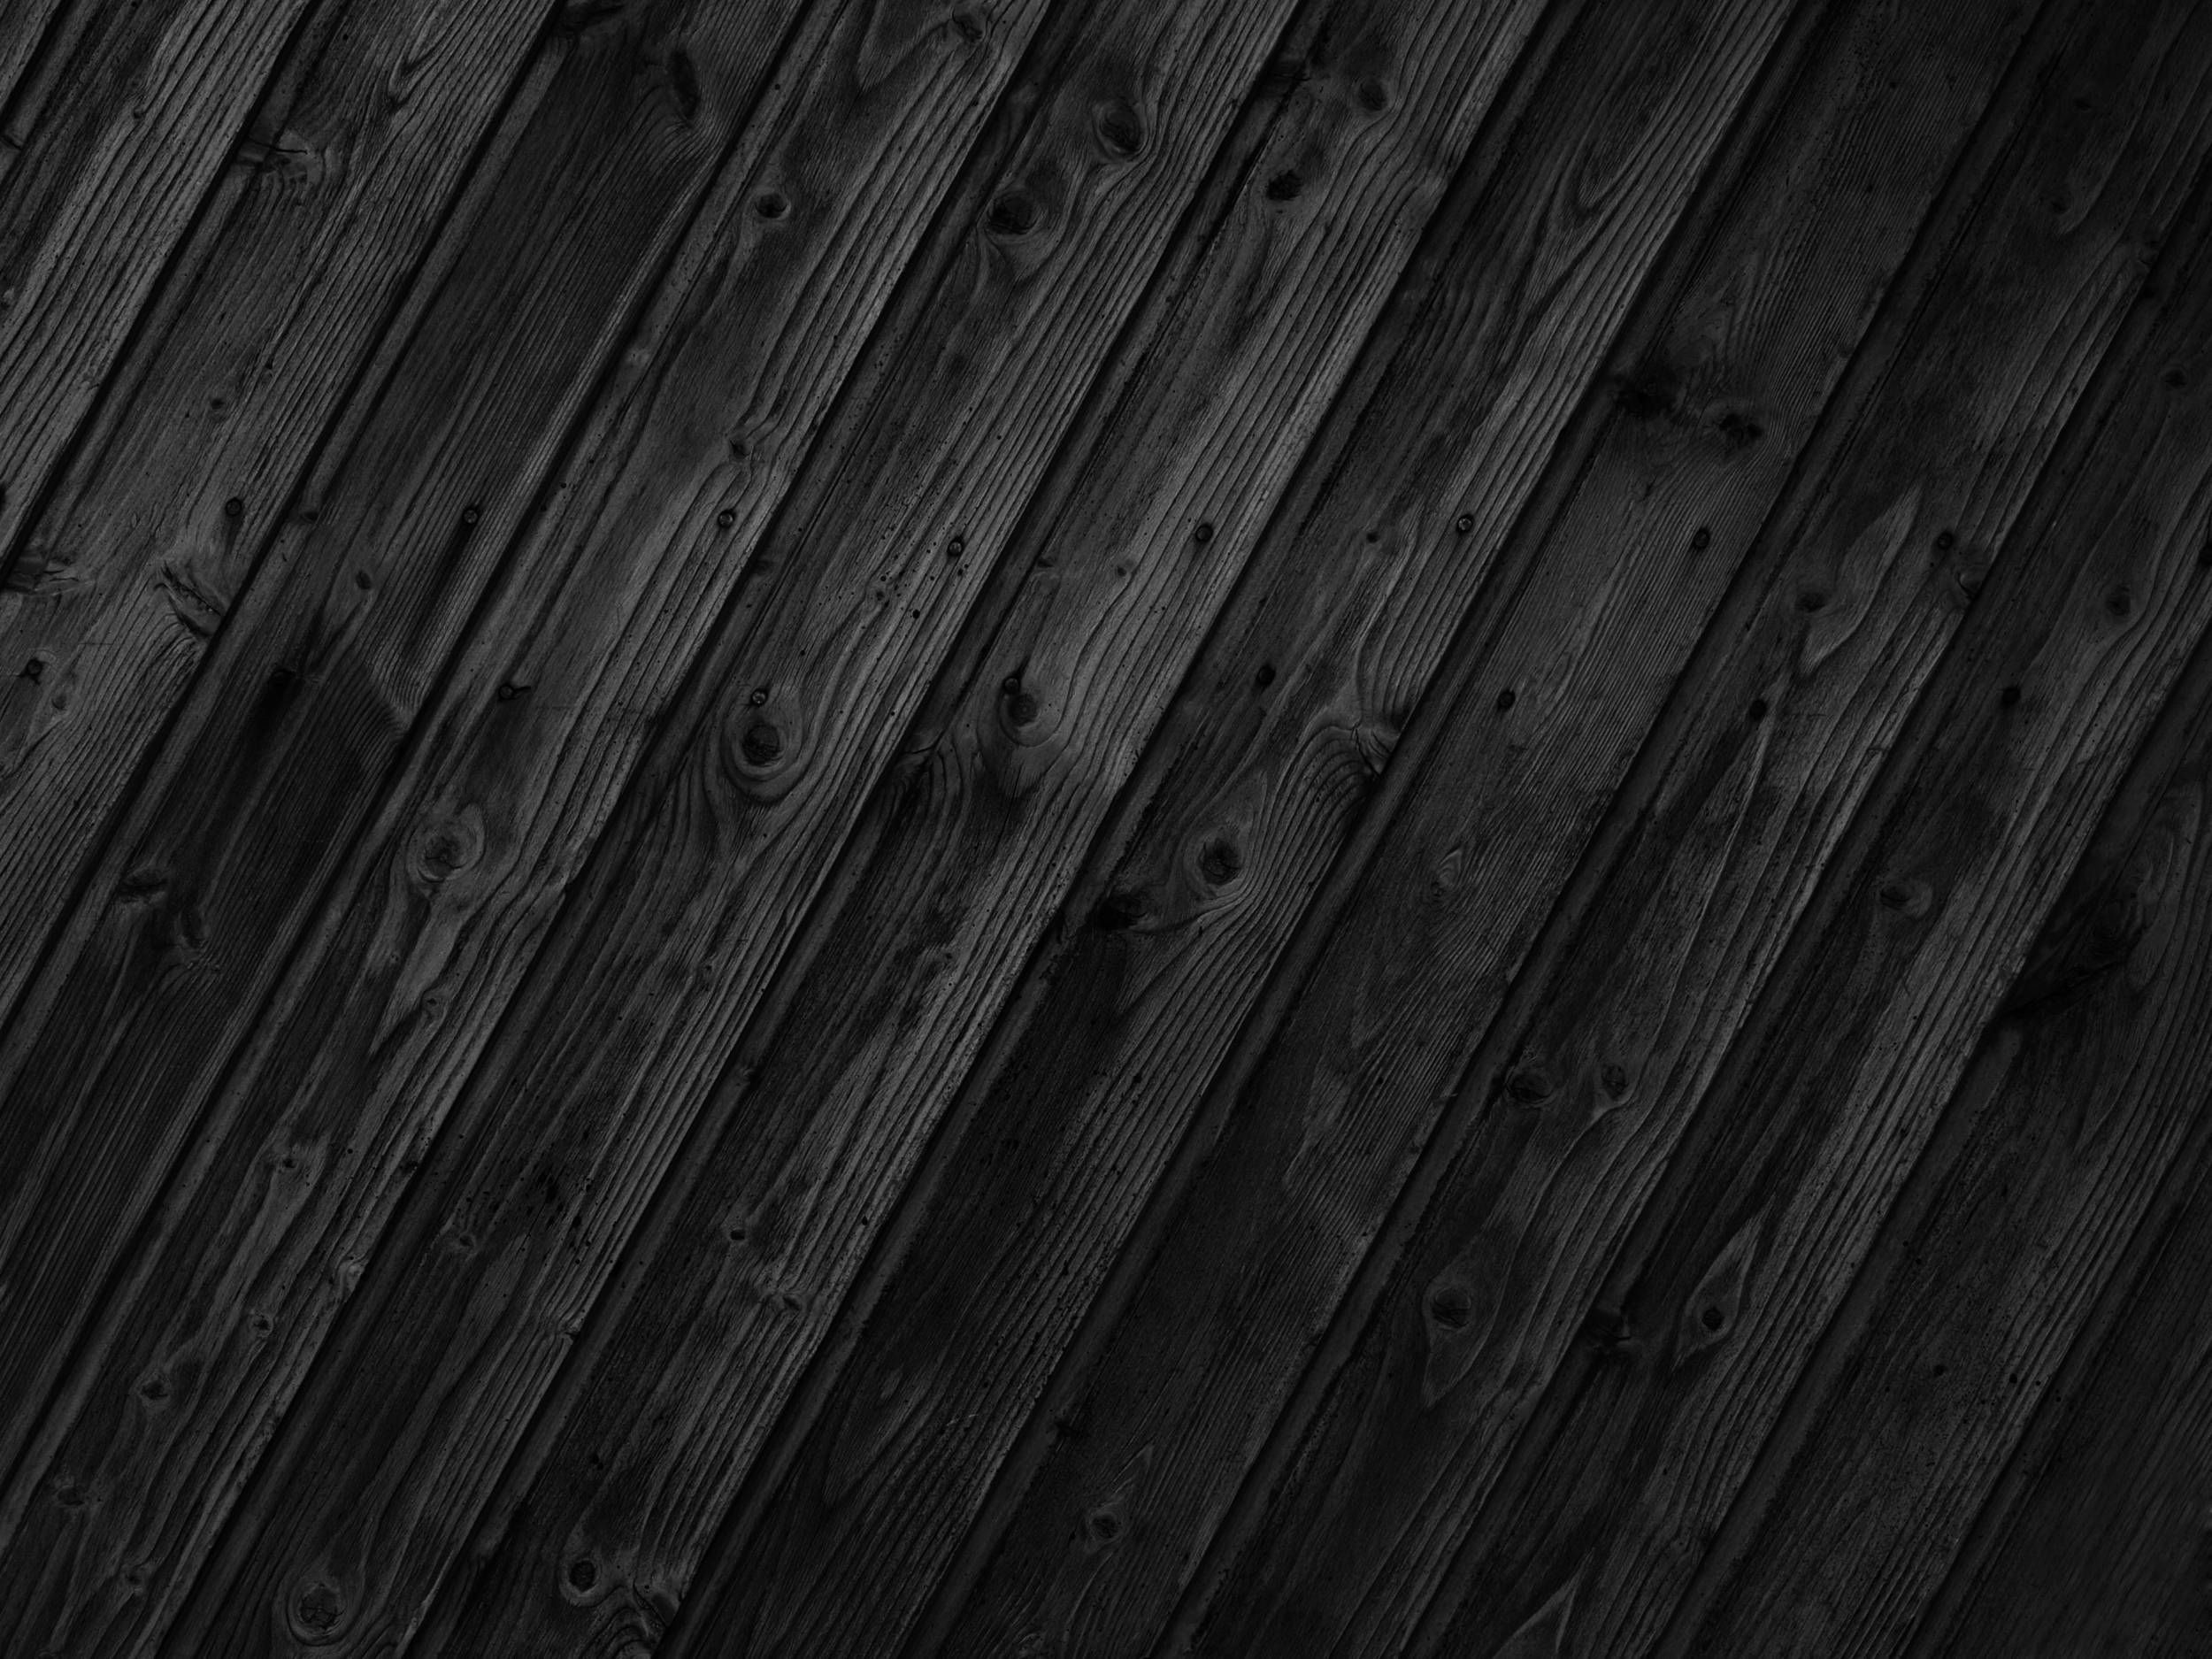 Dark Wood Wallpaper. Black wood background